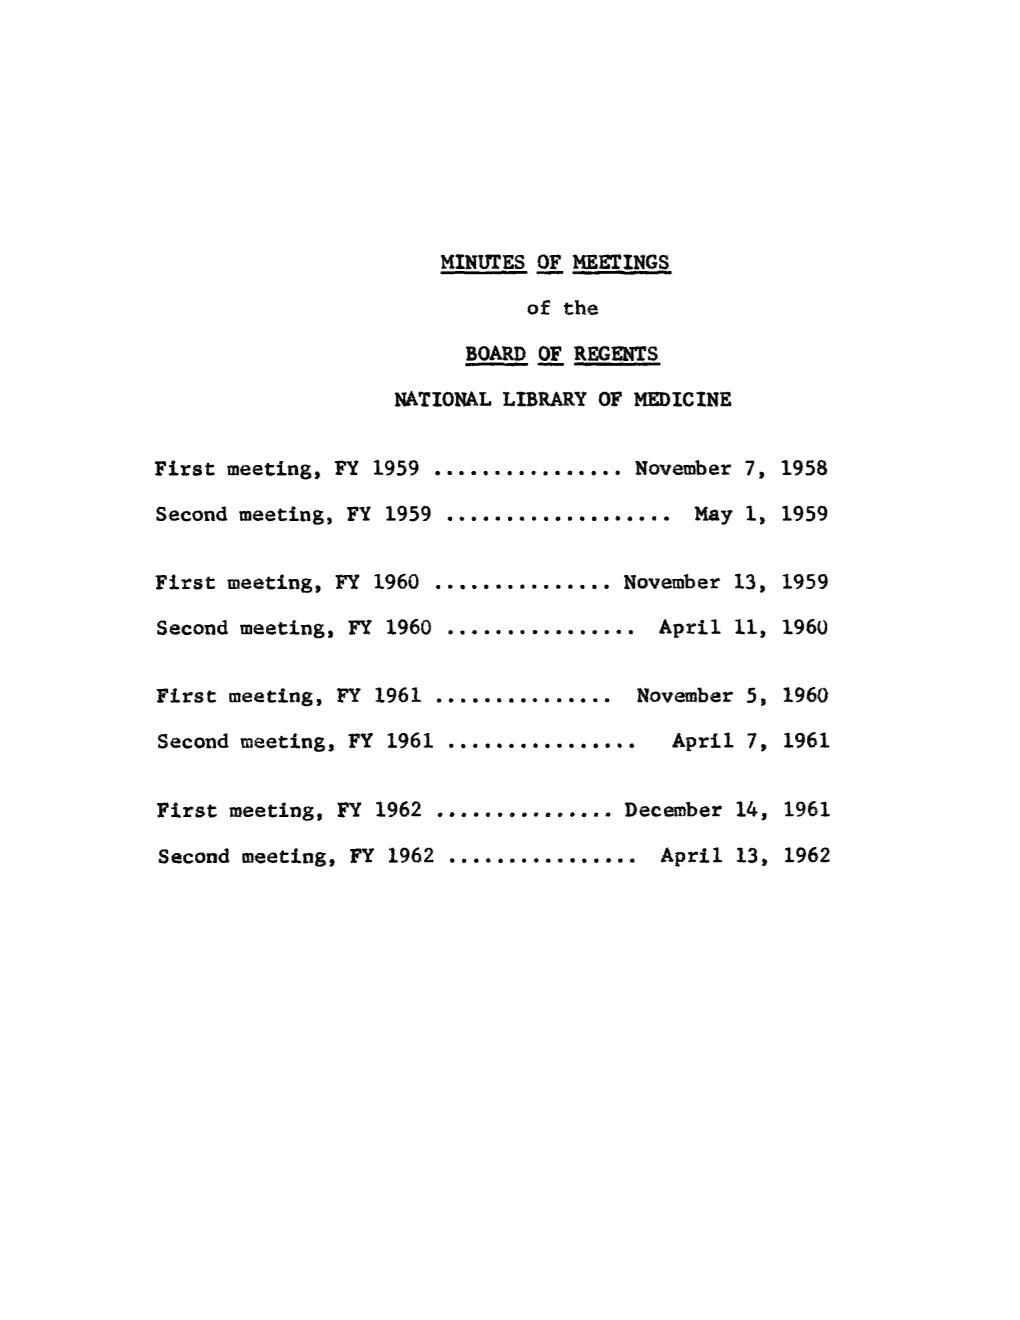 NLM Board of Regent's Minutes, 1959-1962